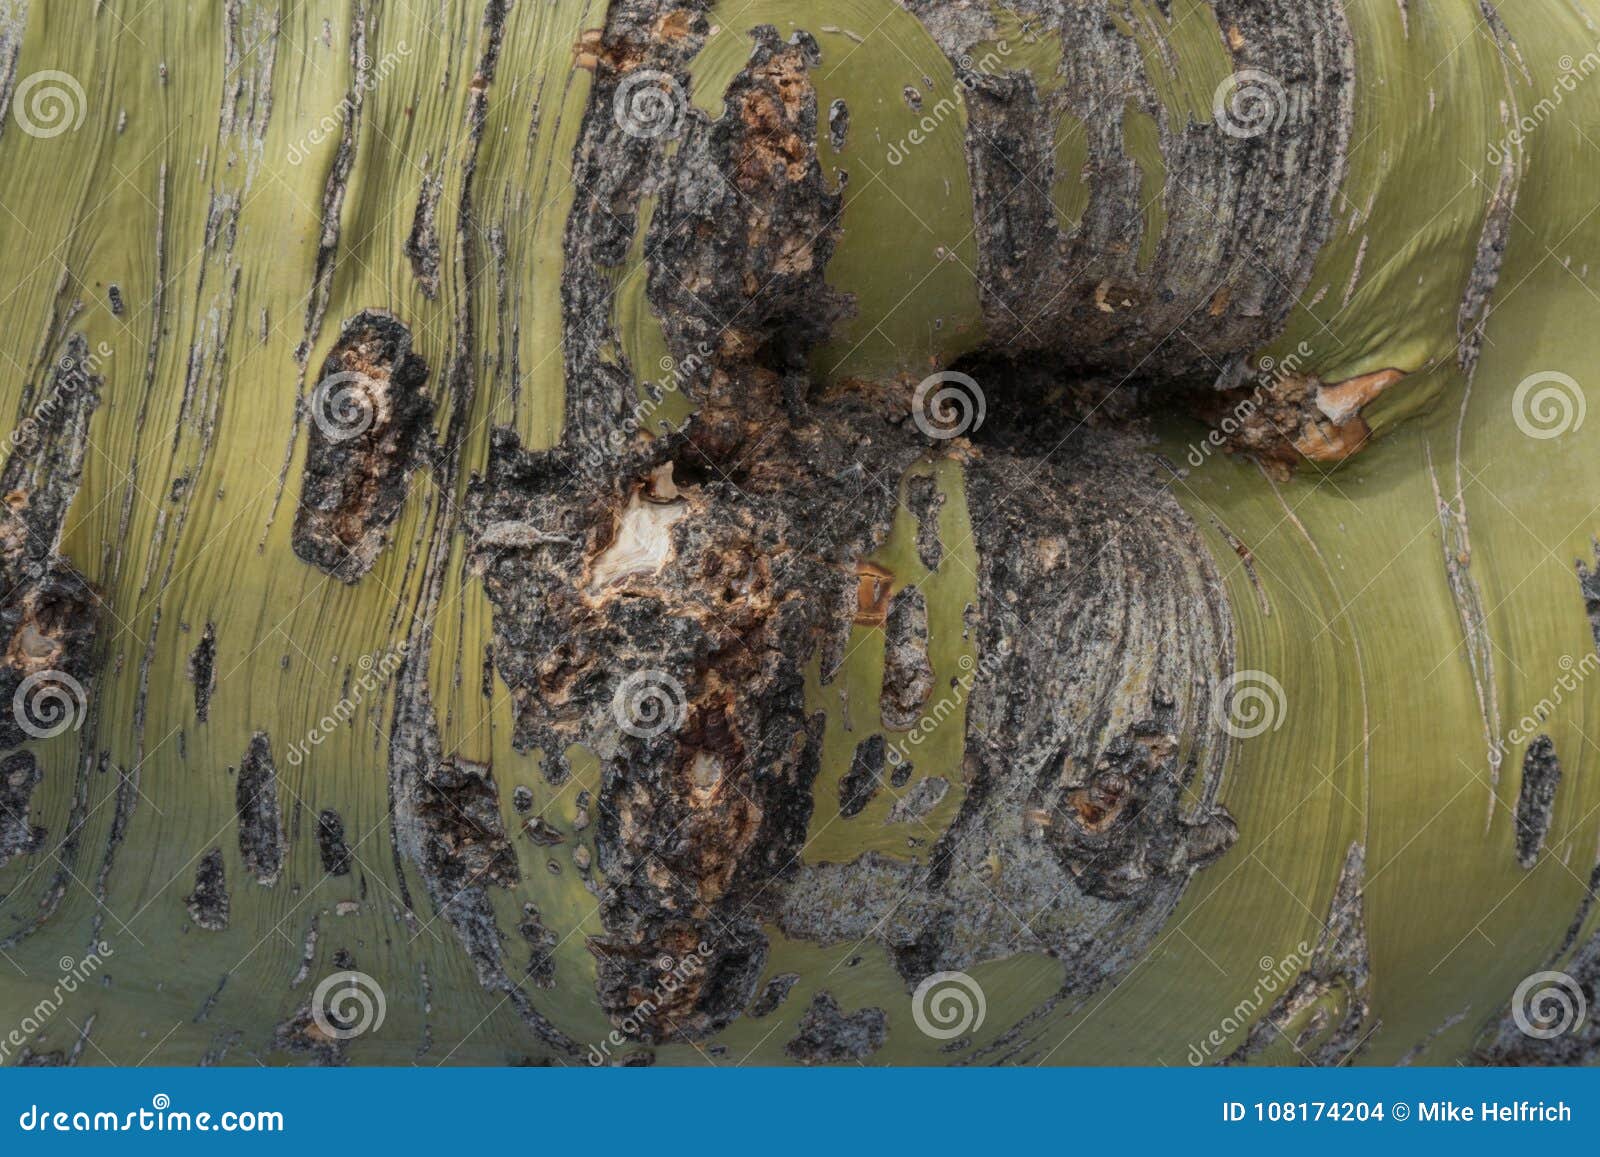 Close Up Of Palo Verde Tree Bark In Arizona. Stock Photo - Image of ...